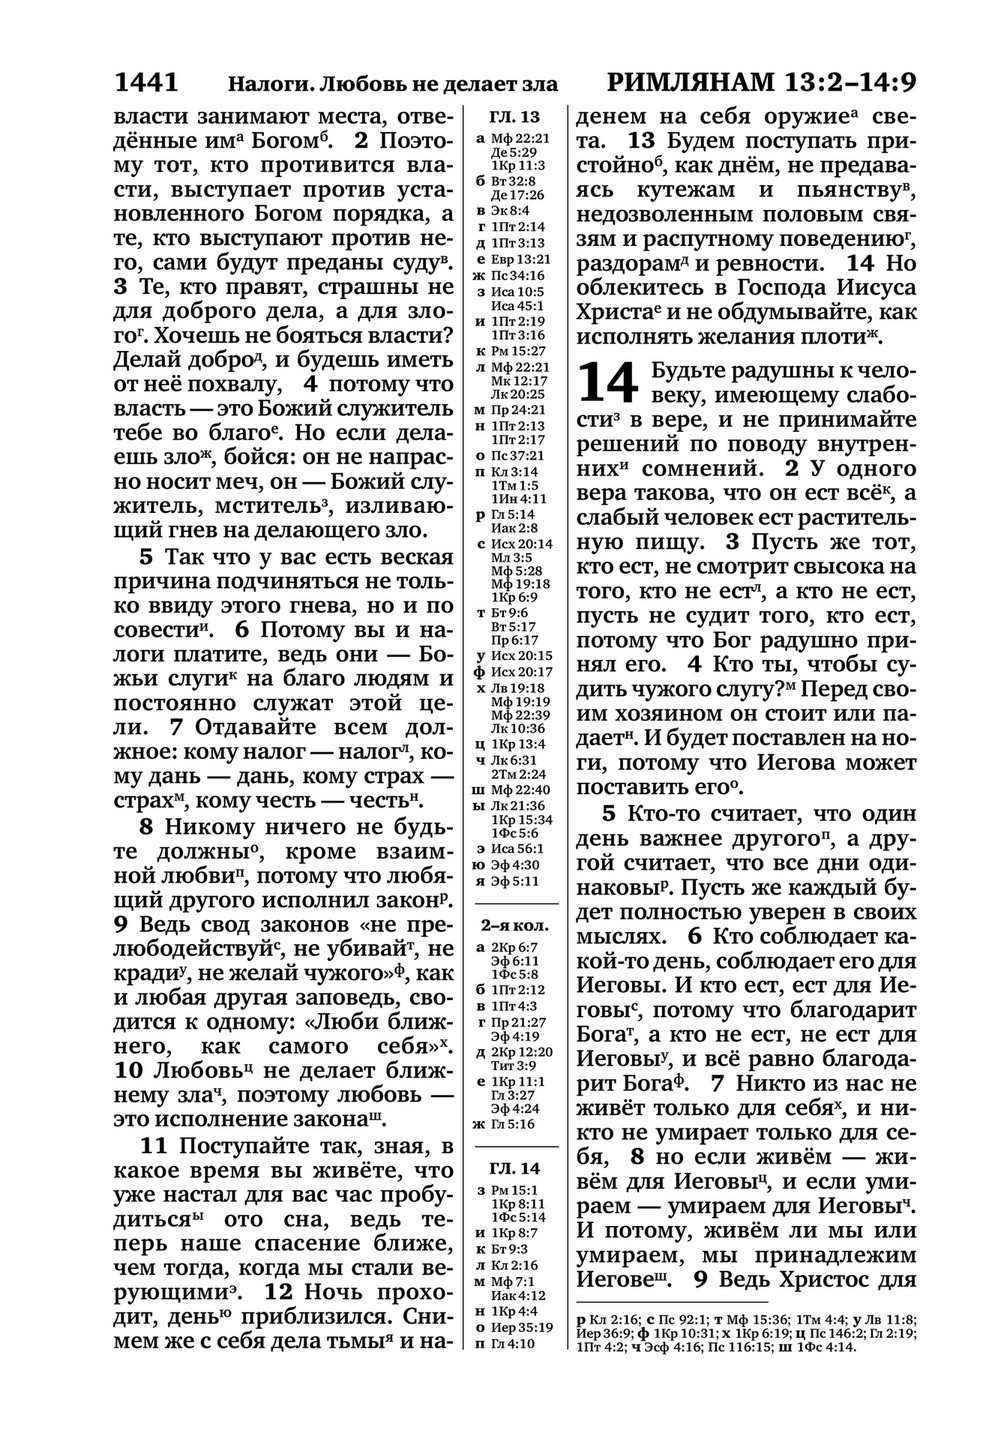 Poznavatelnieknigi Bi12 U Page 1444 1445 Created With Publitas Com